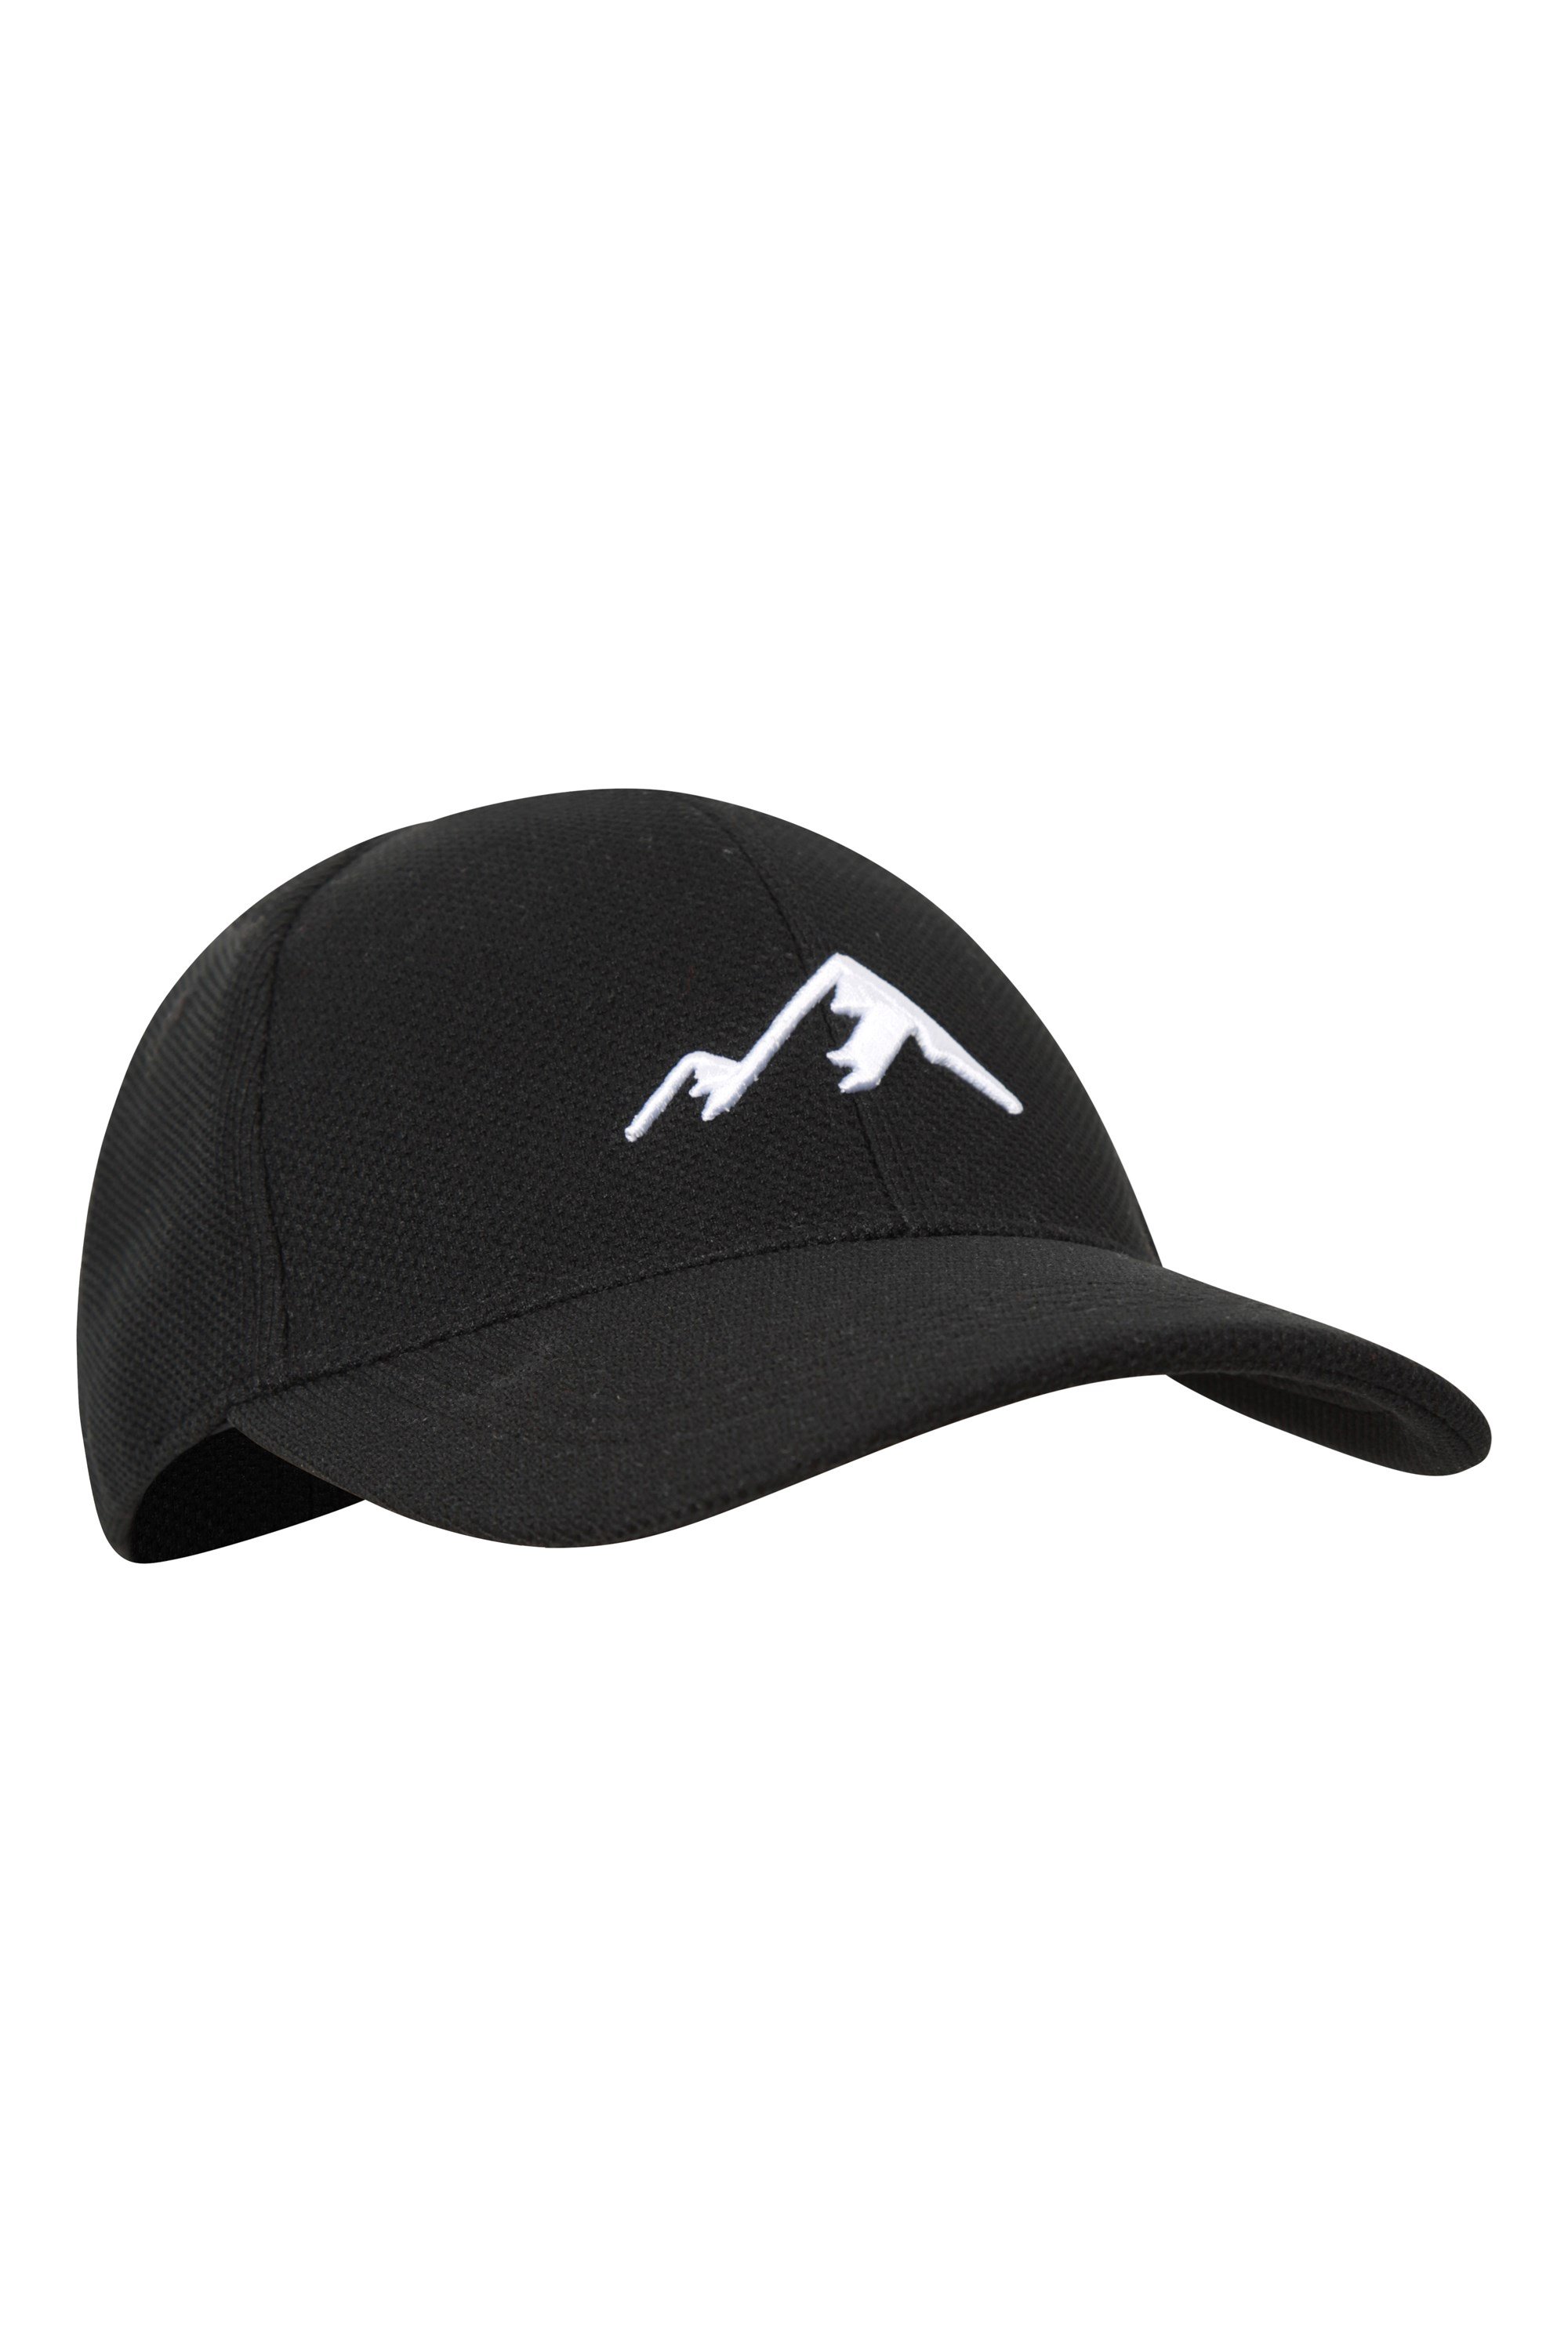 Pedham Mens Embroidered Golf Hat - Black